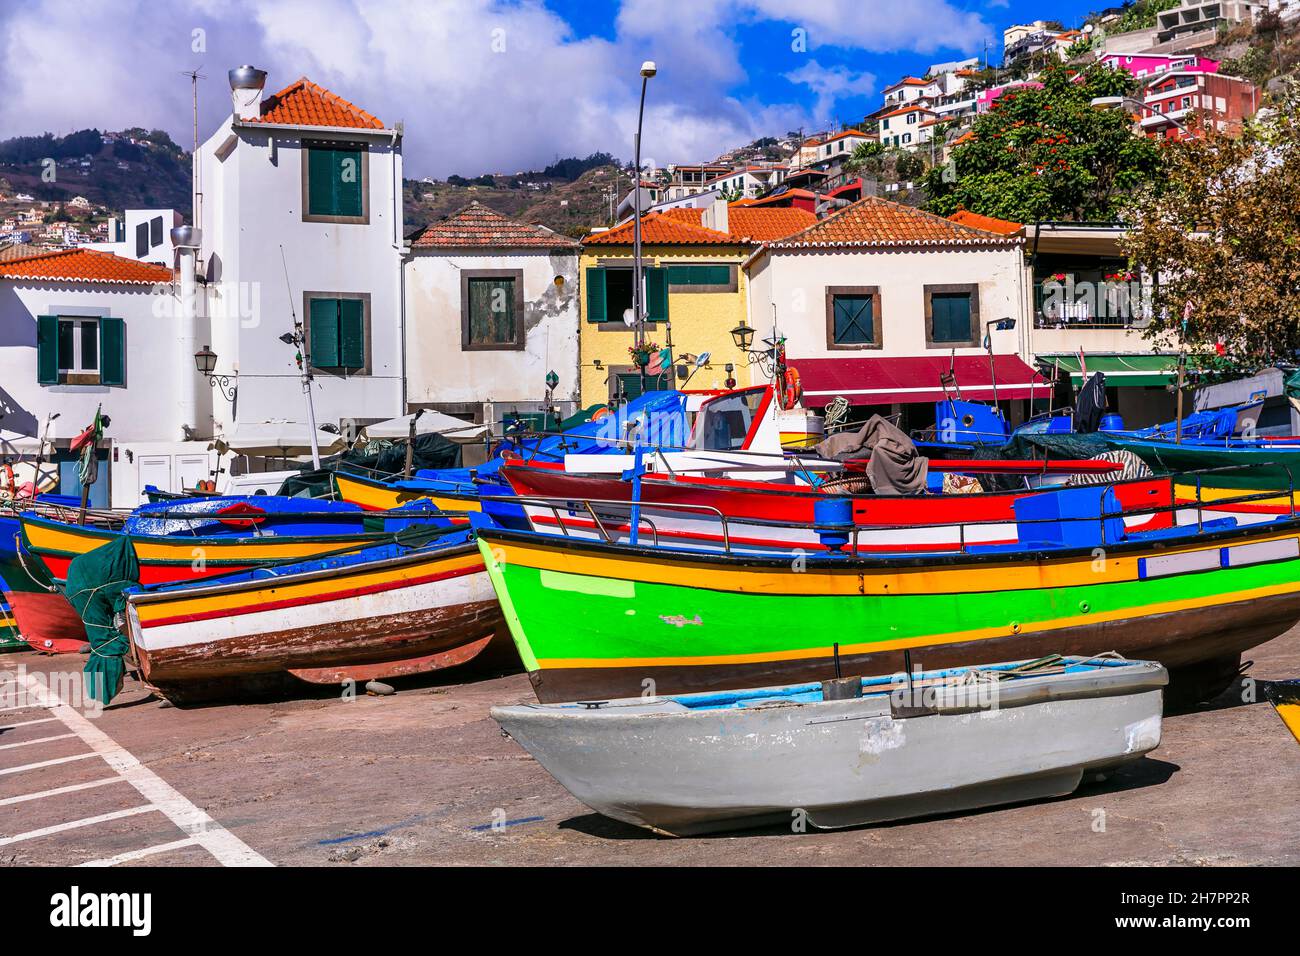 Colorfull traditional fishing village Camara de Lobos. Popular tourist destination .Madeira island travel and landmarks. Portugal Stock Photo